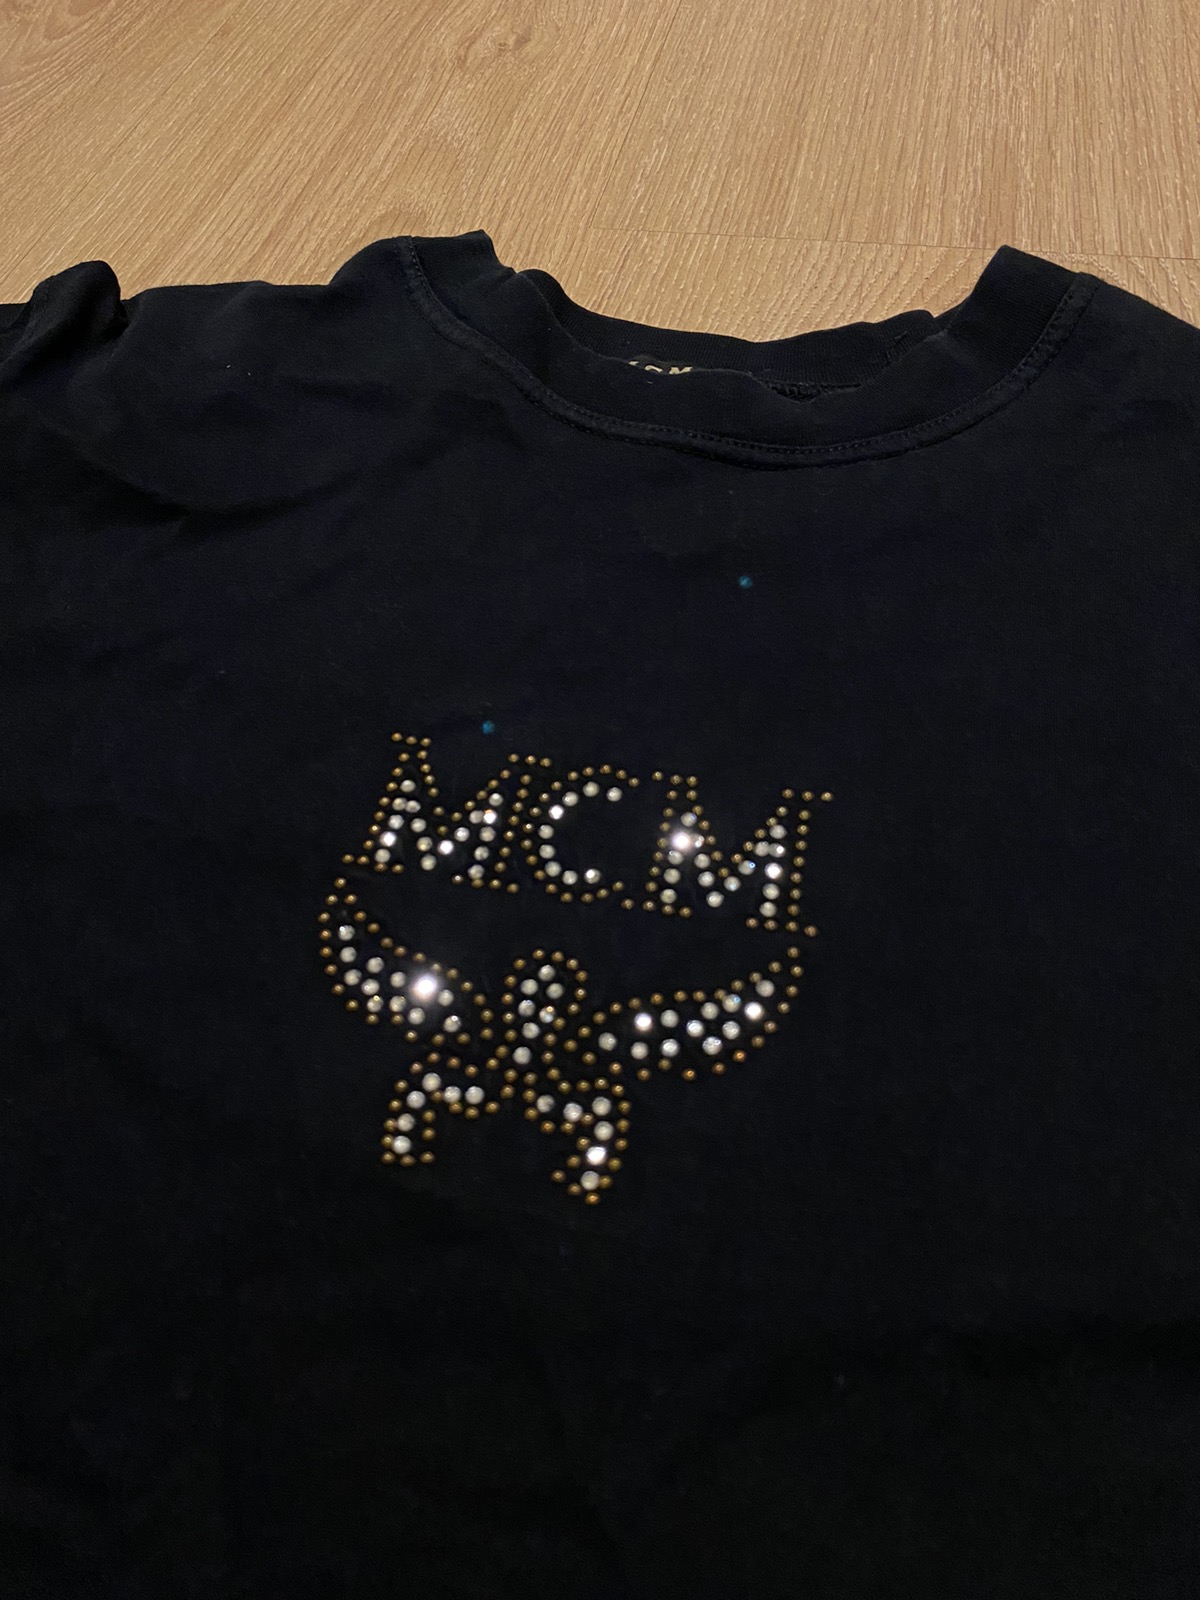 MCM x Swarovski center logo t shirt - 2